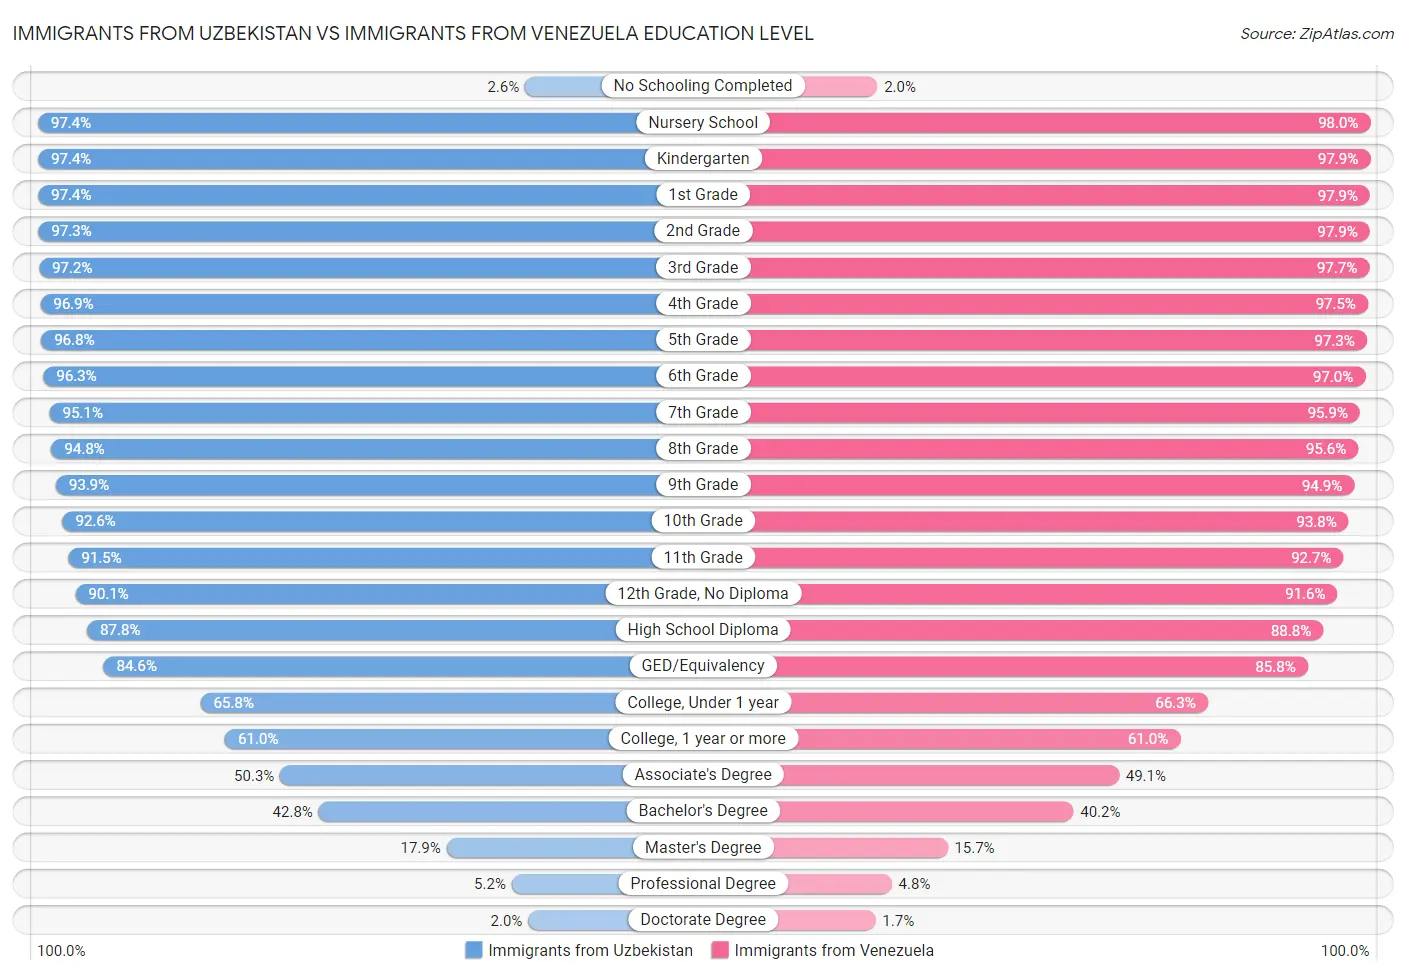 Immigrants from Uzbekistan vs Immigrants from Venezuela Education Level